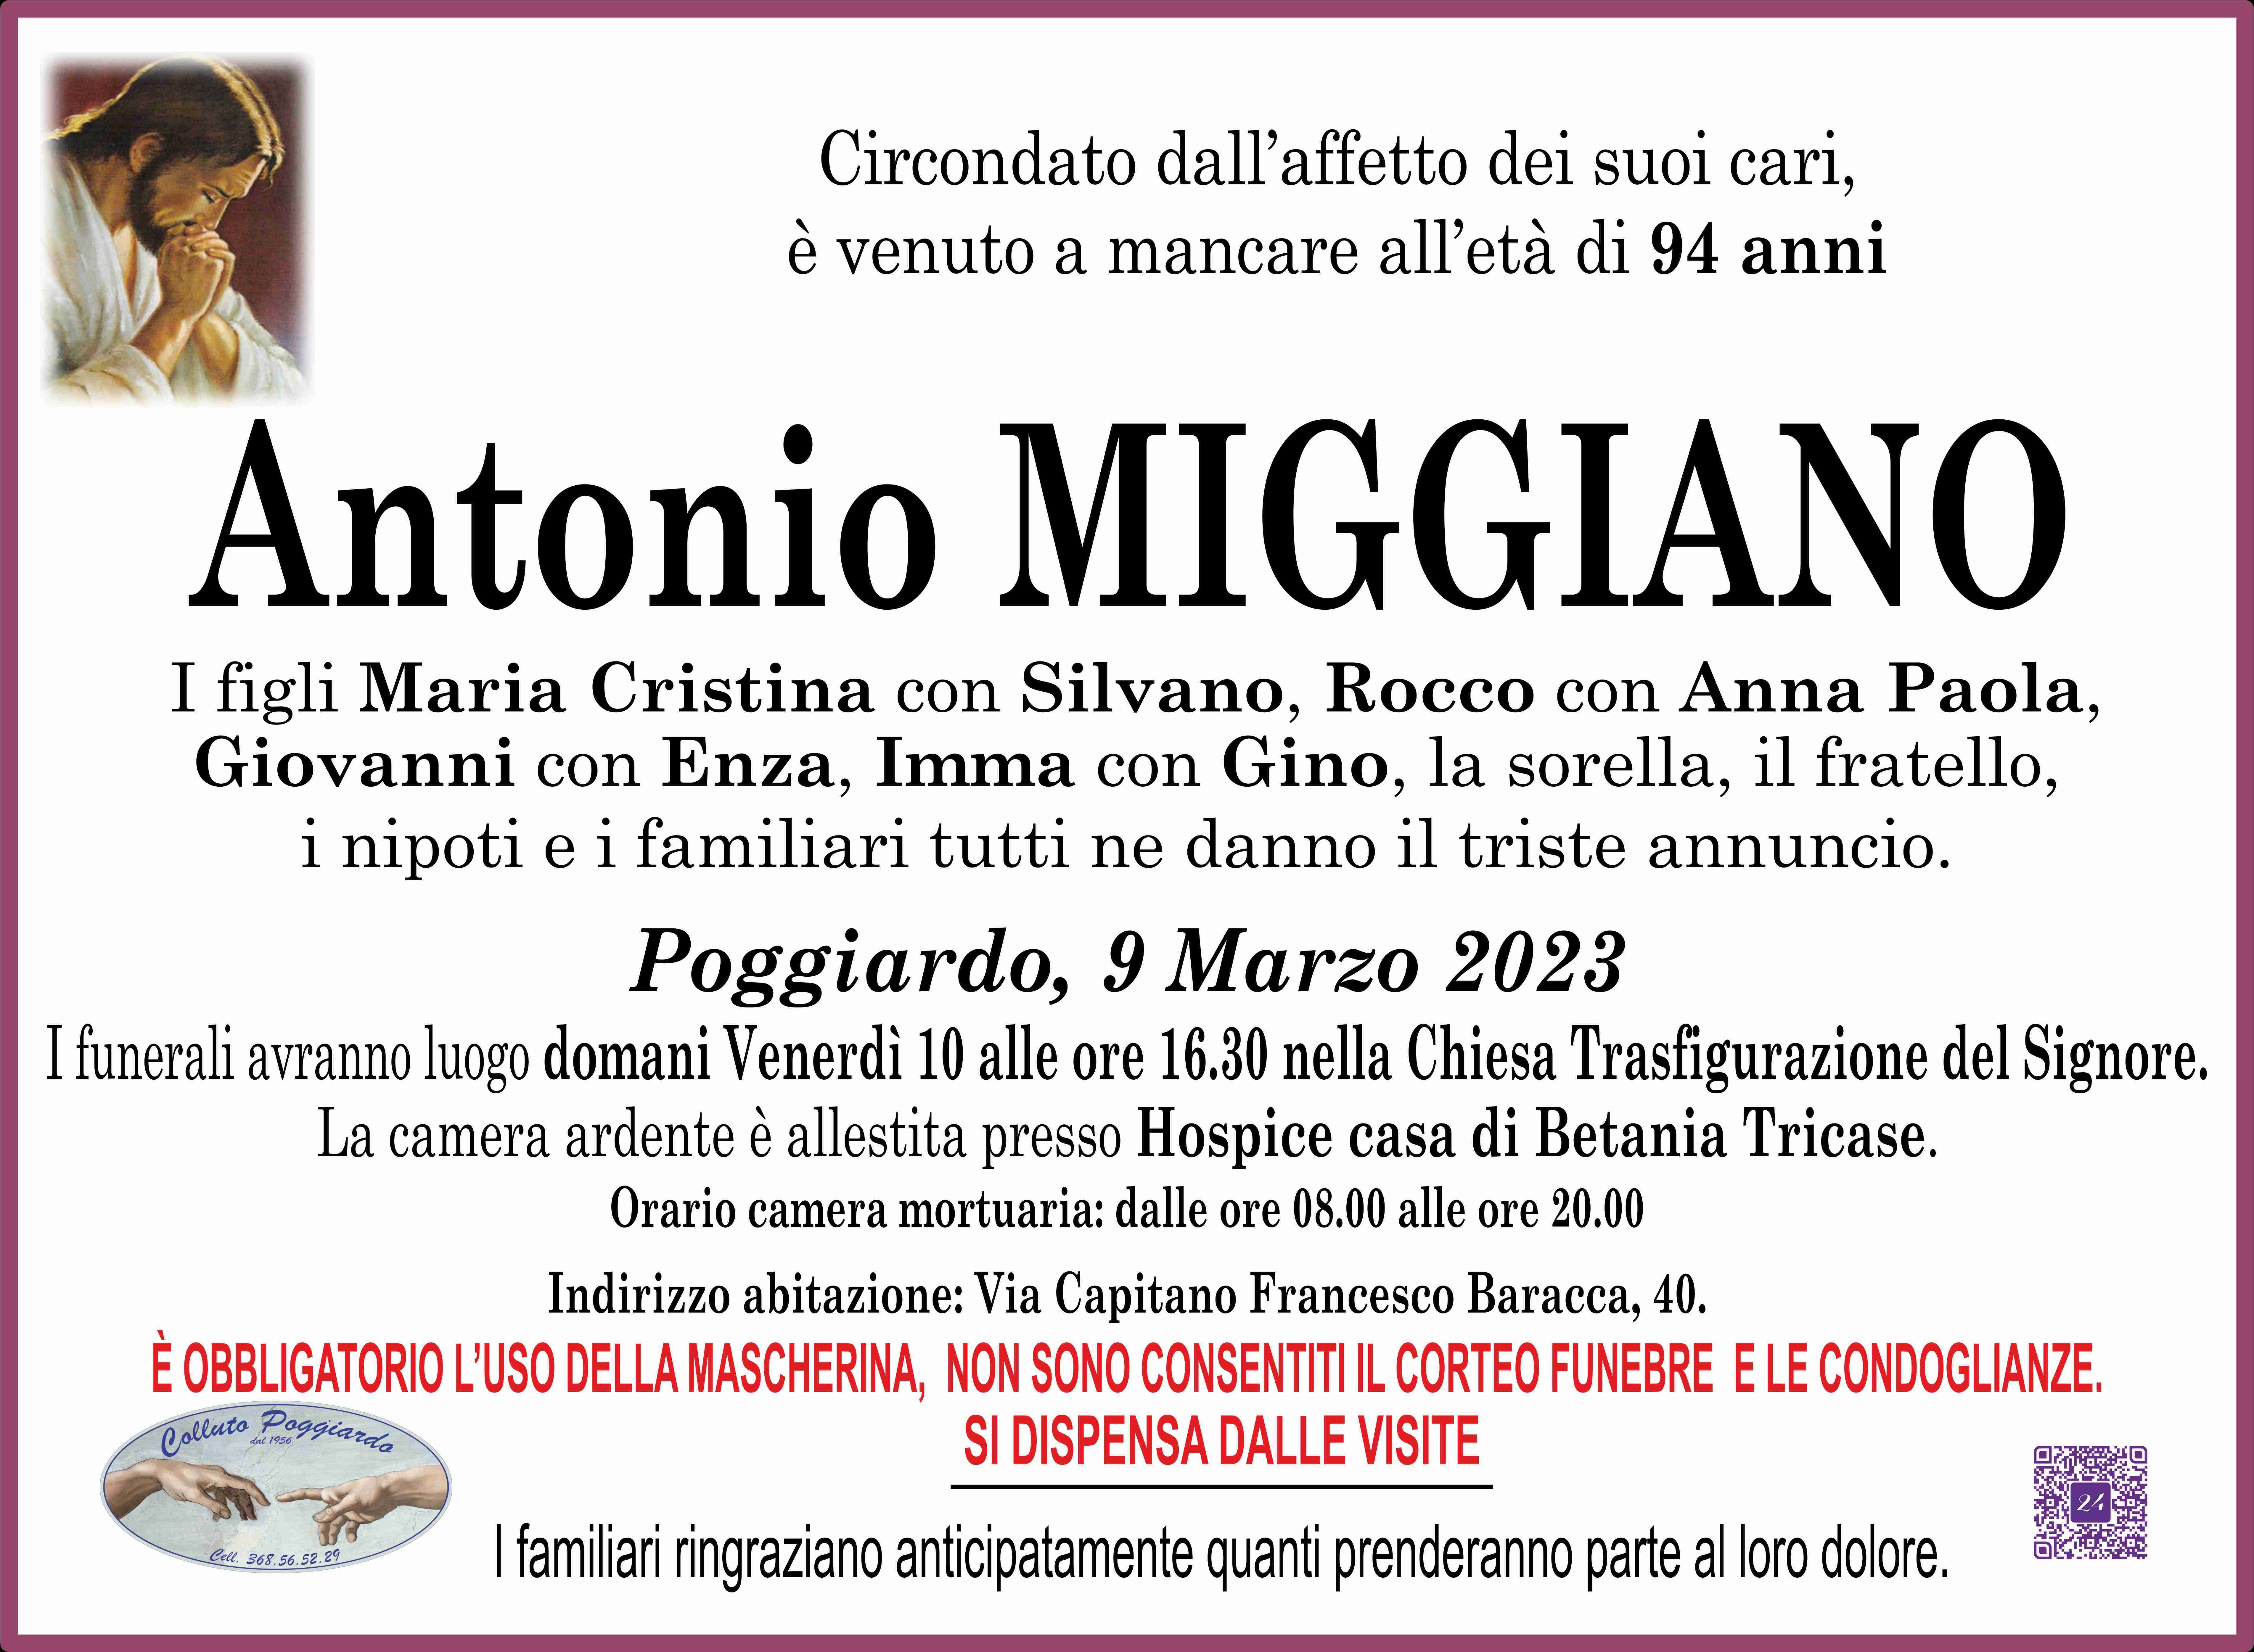 Antonio Miggiano